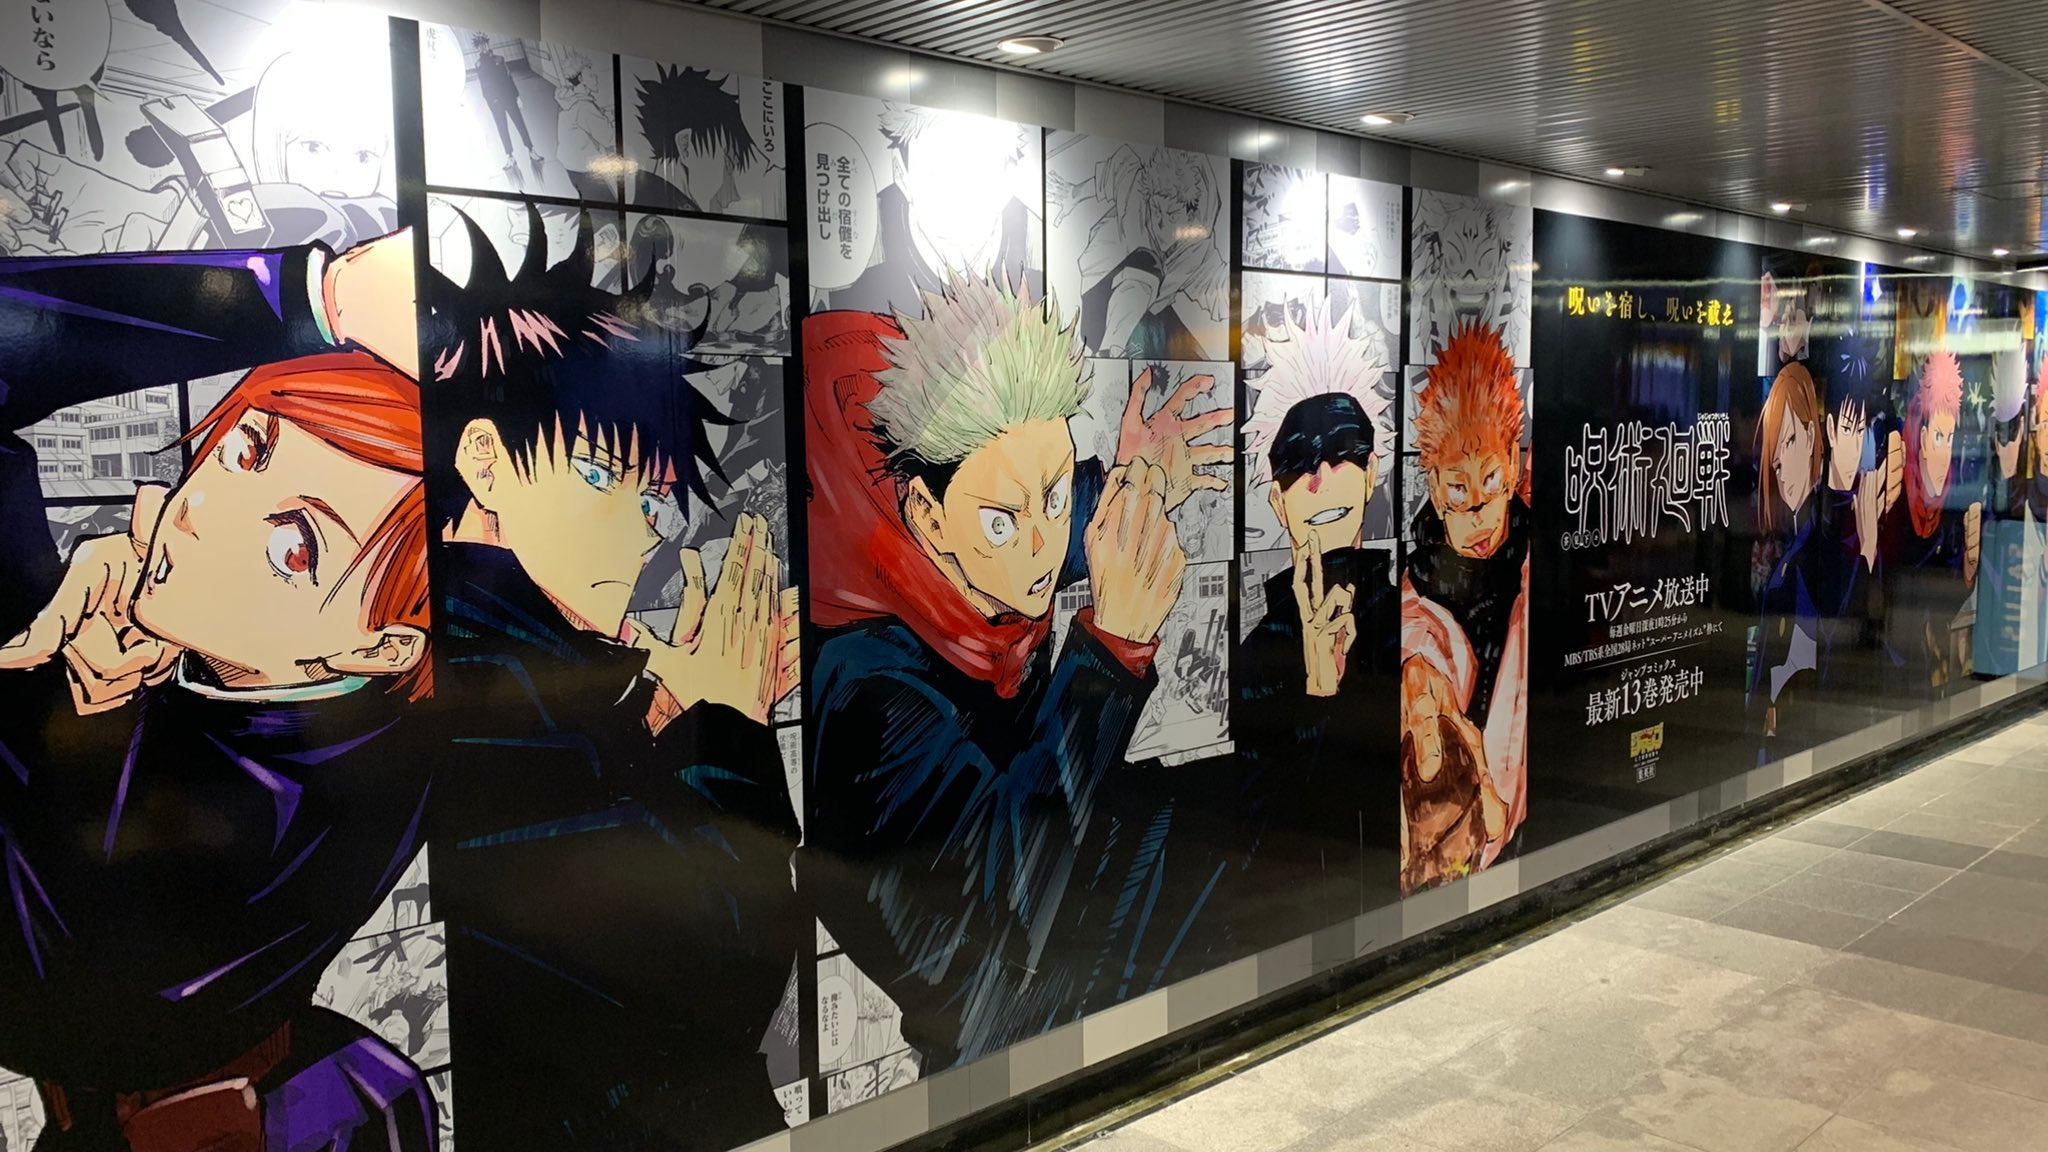 Jujutsu Kaisen Anime advertisement on a subway wall